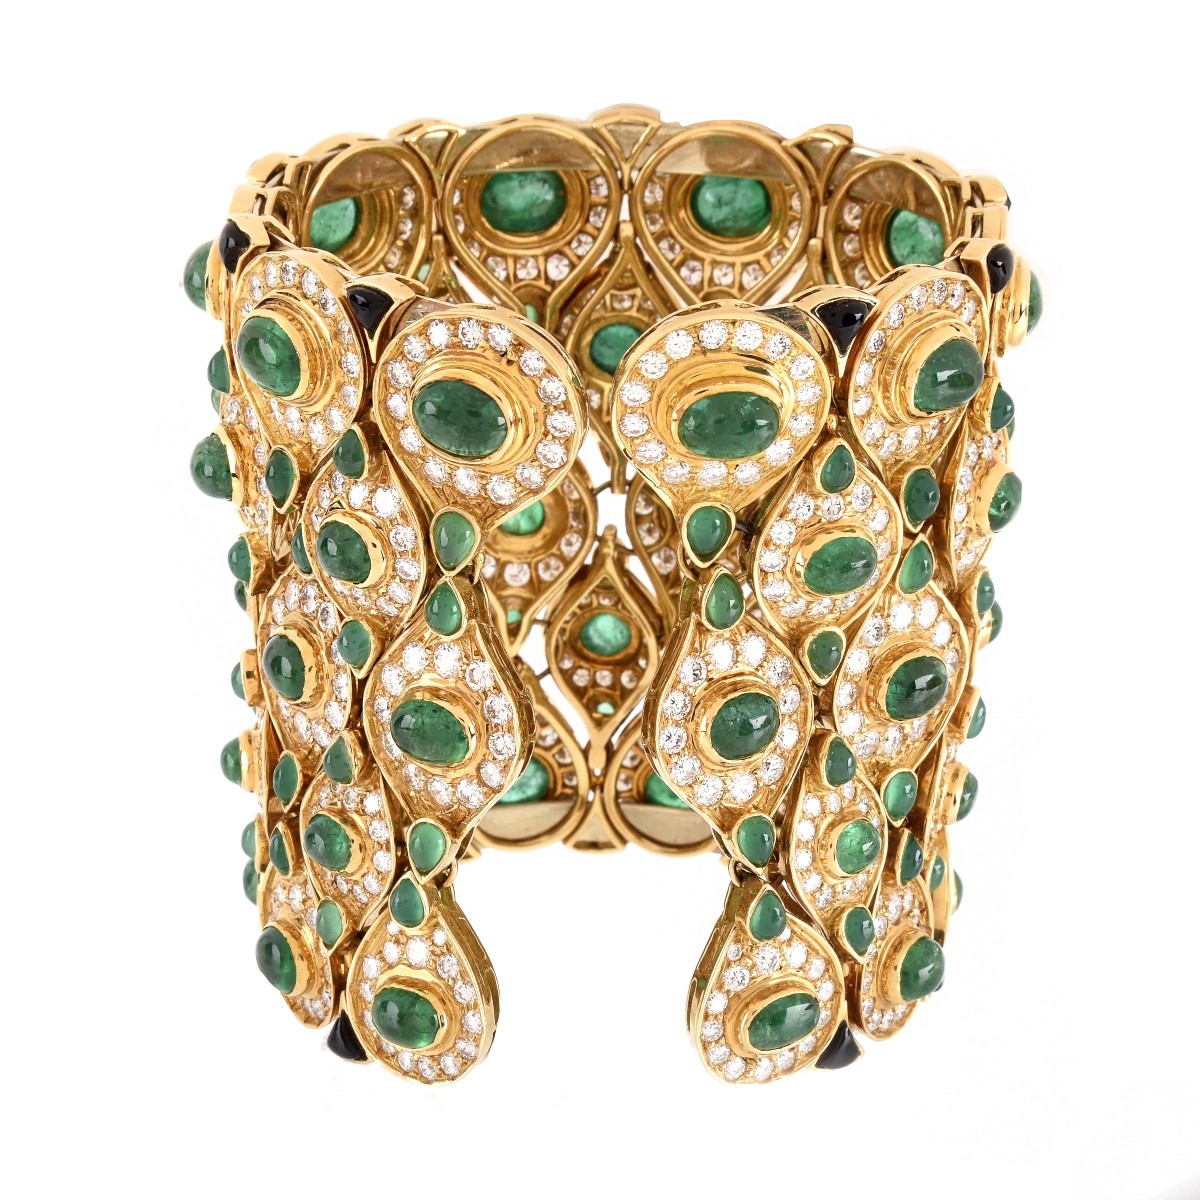 Exquisite Emerald, Diamond and 18K Cuff Bangle